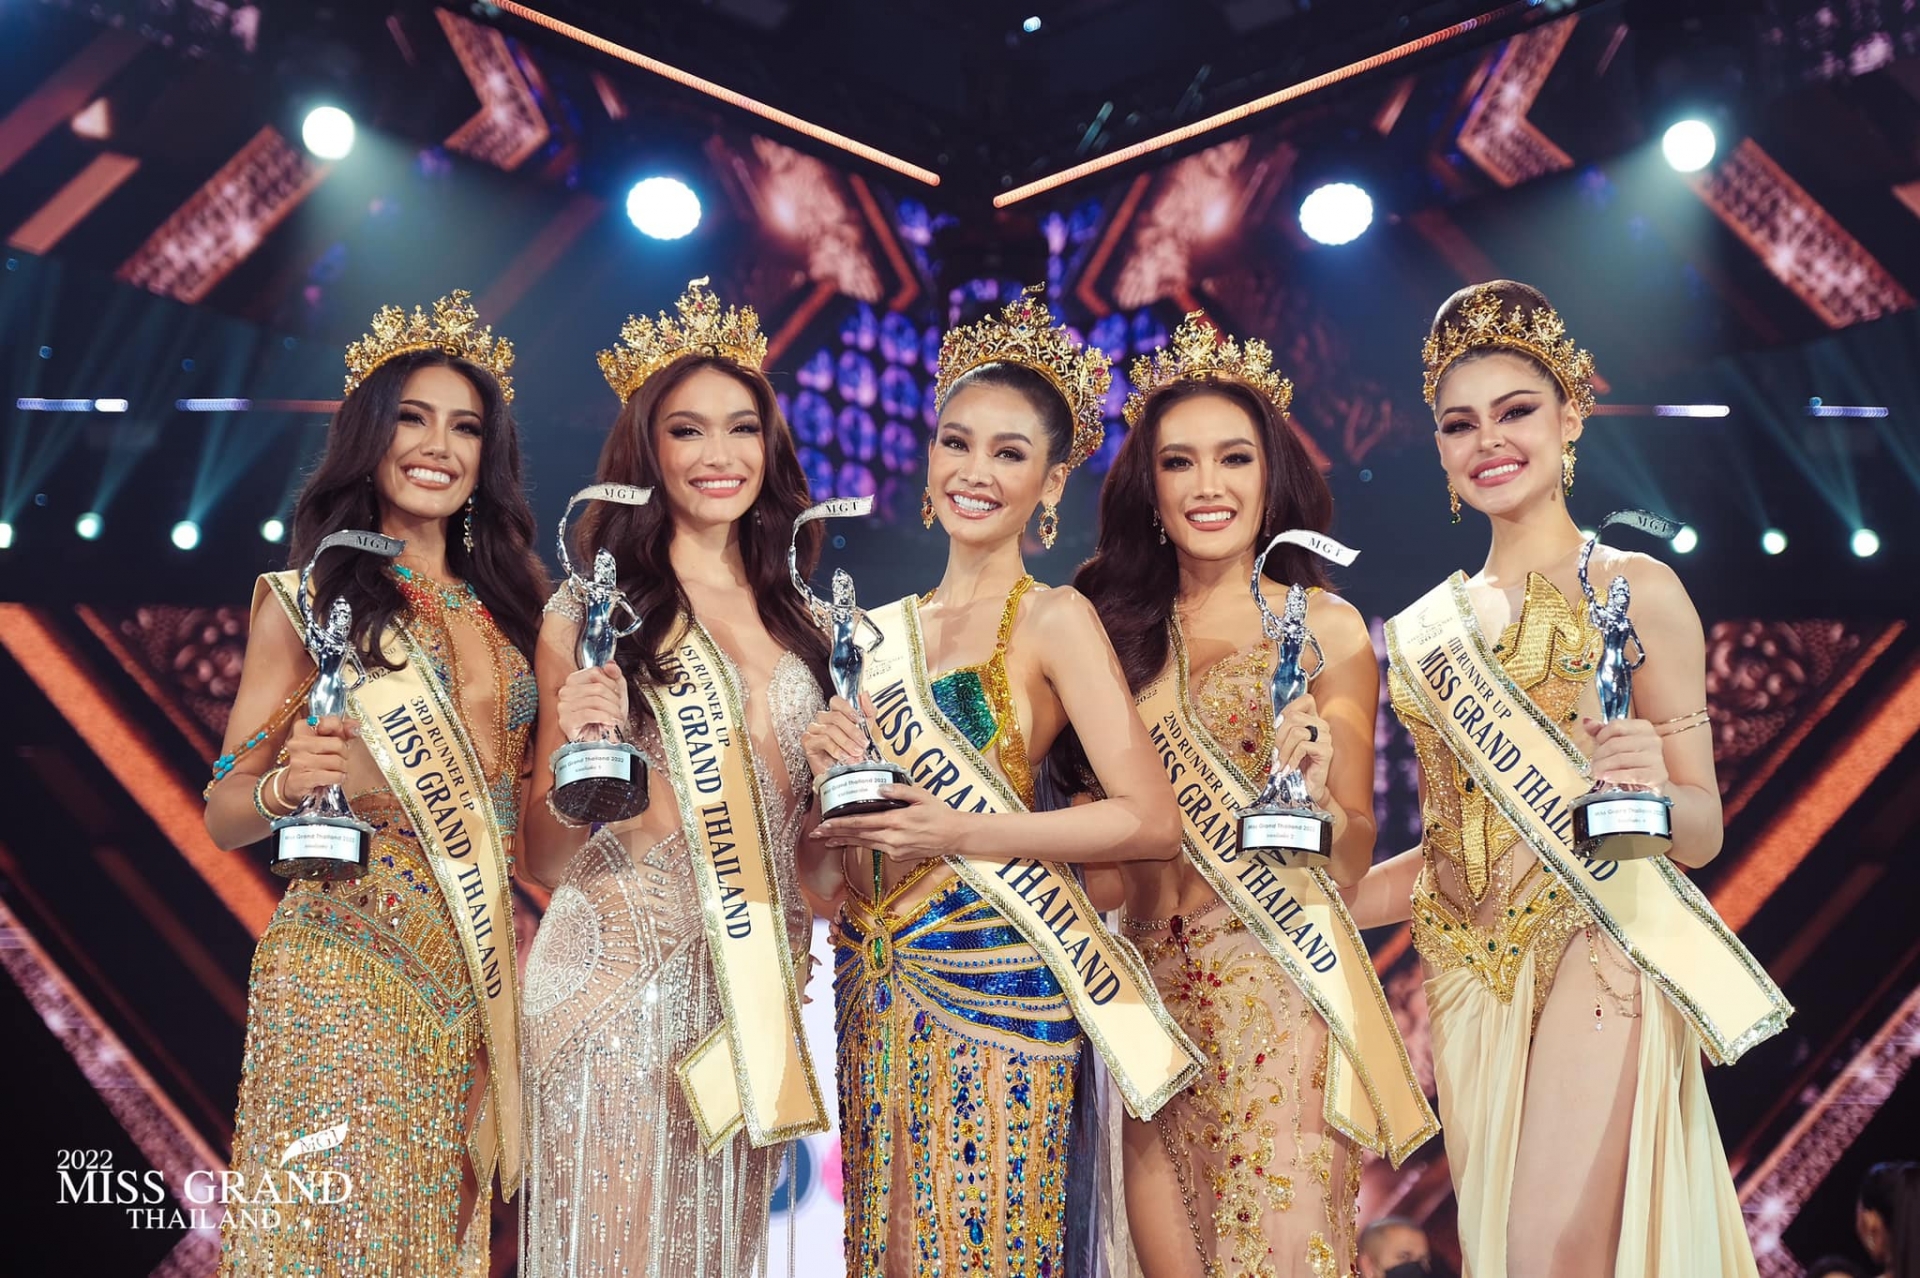 Miss Grand Thailand 2022 is Engfa Waraha